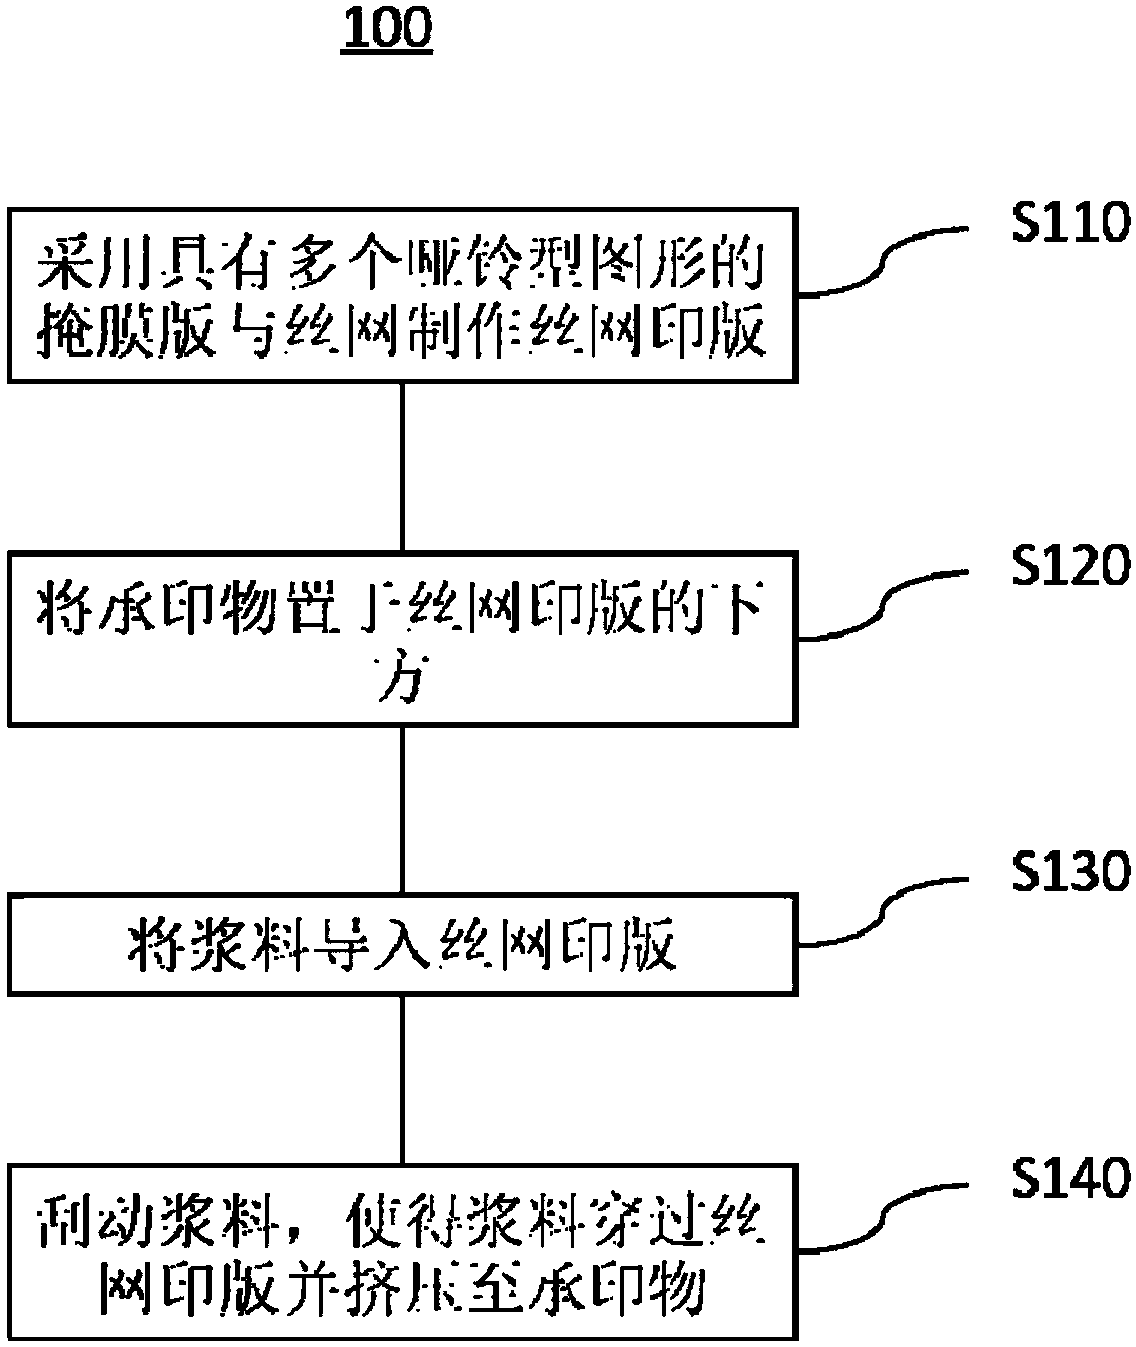 A screen printing method and resistor